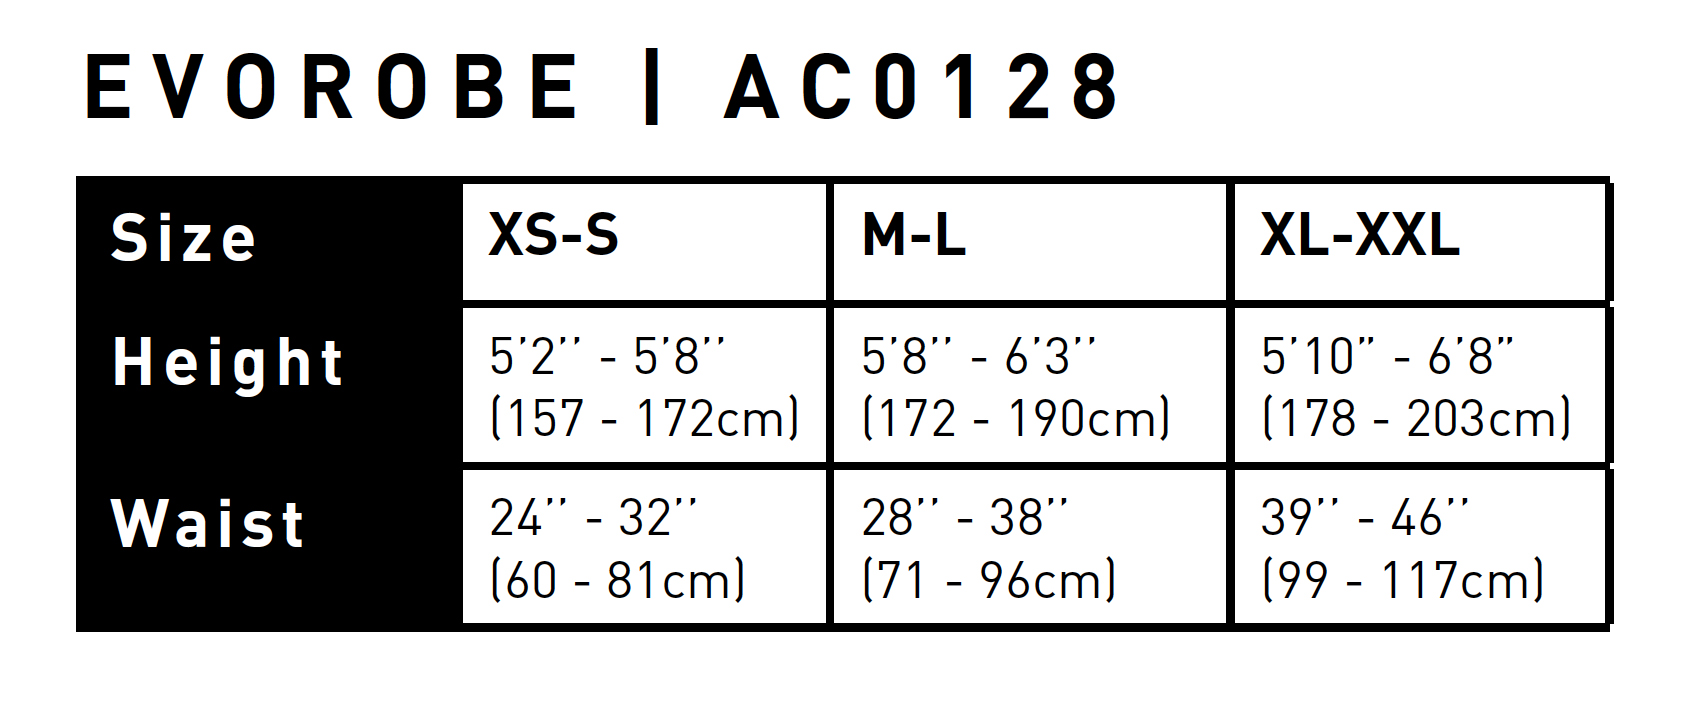 Gul EvoRobe Adult Size 2021 0 Matentabel